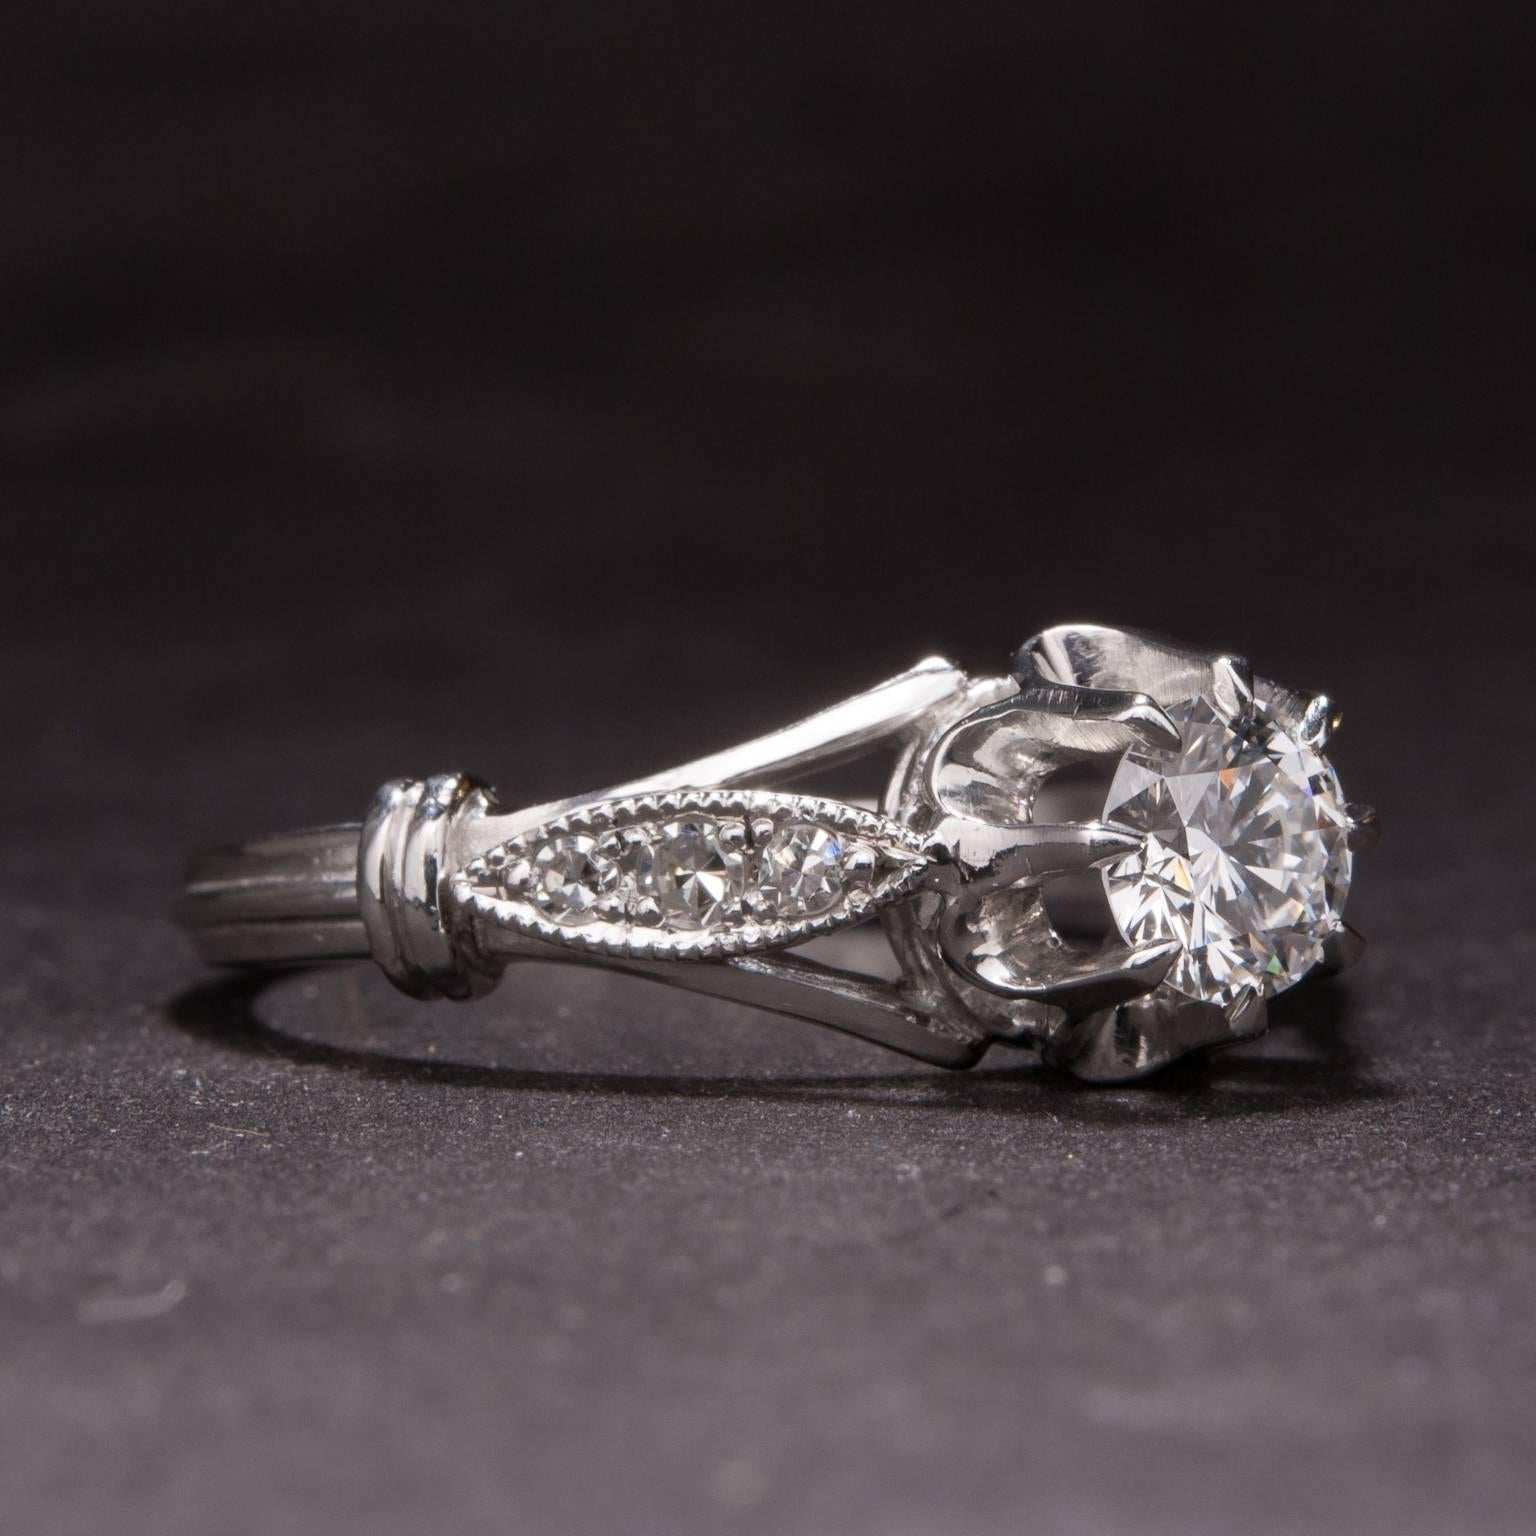 48 carat diamond ring